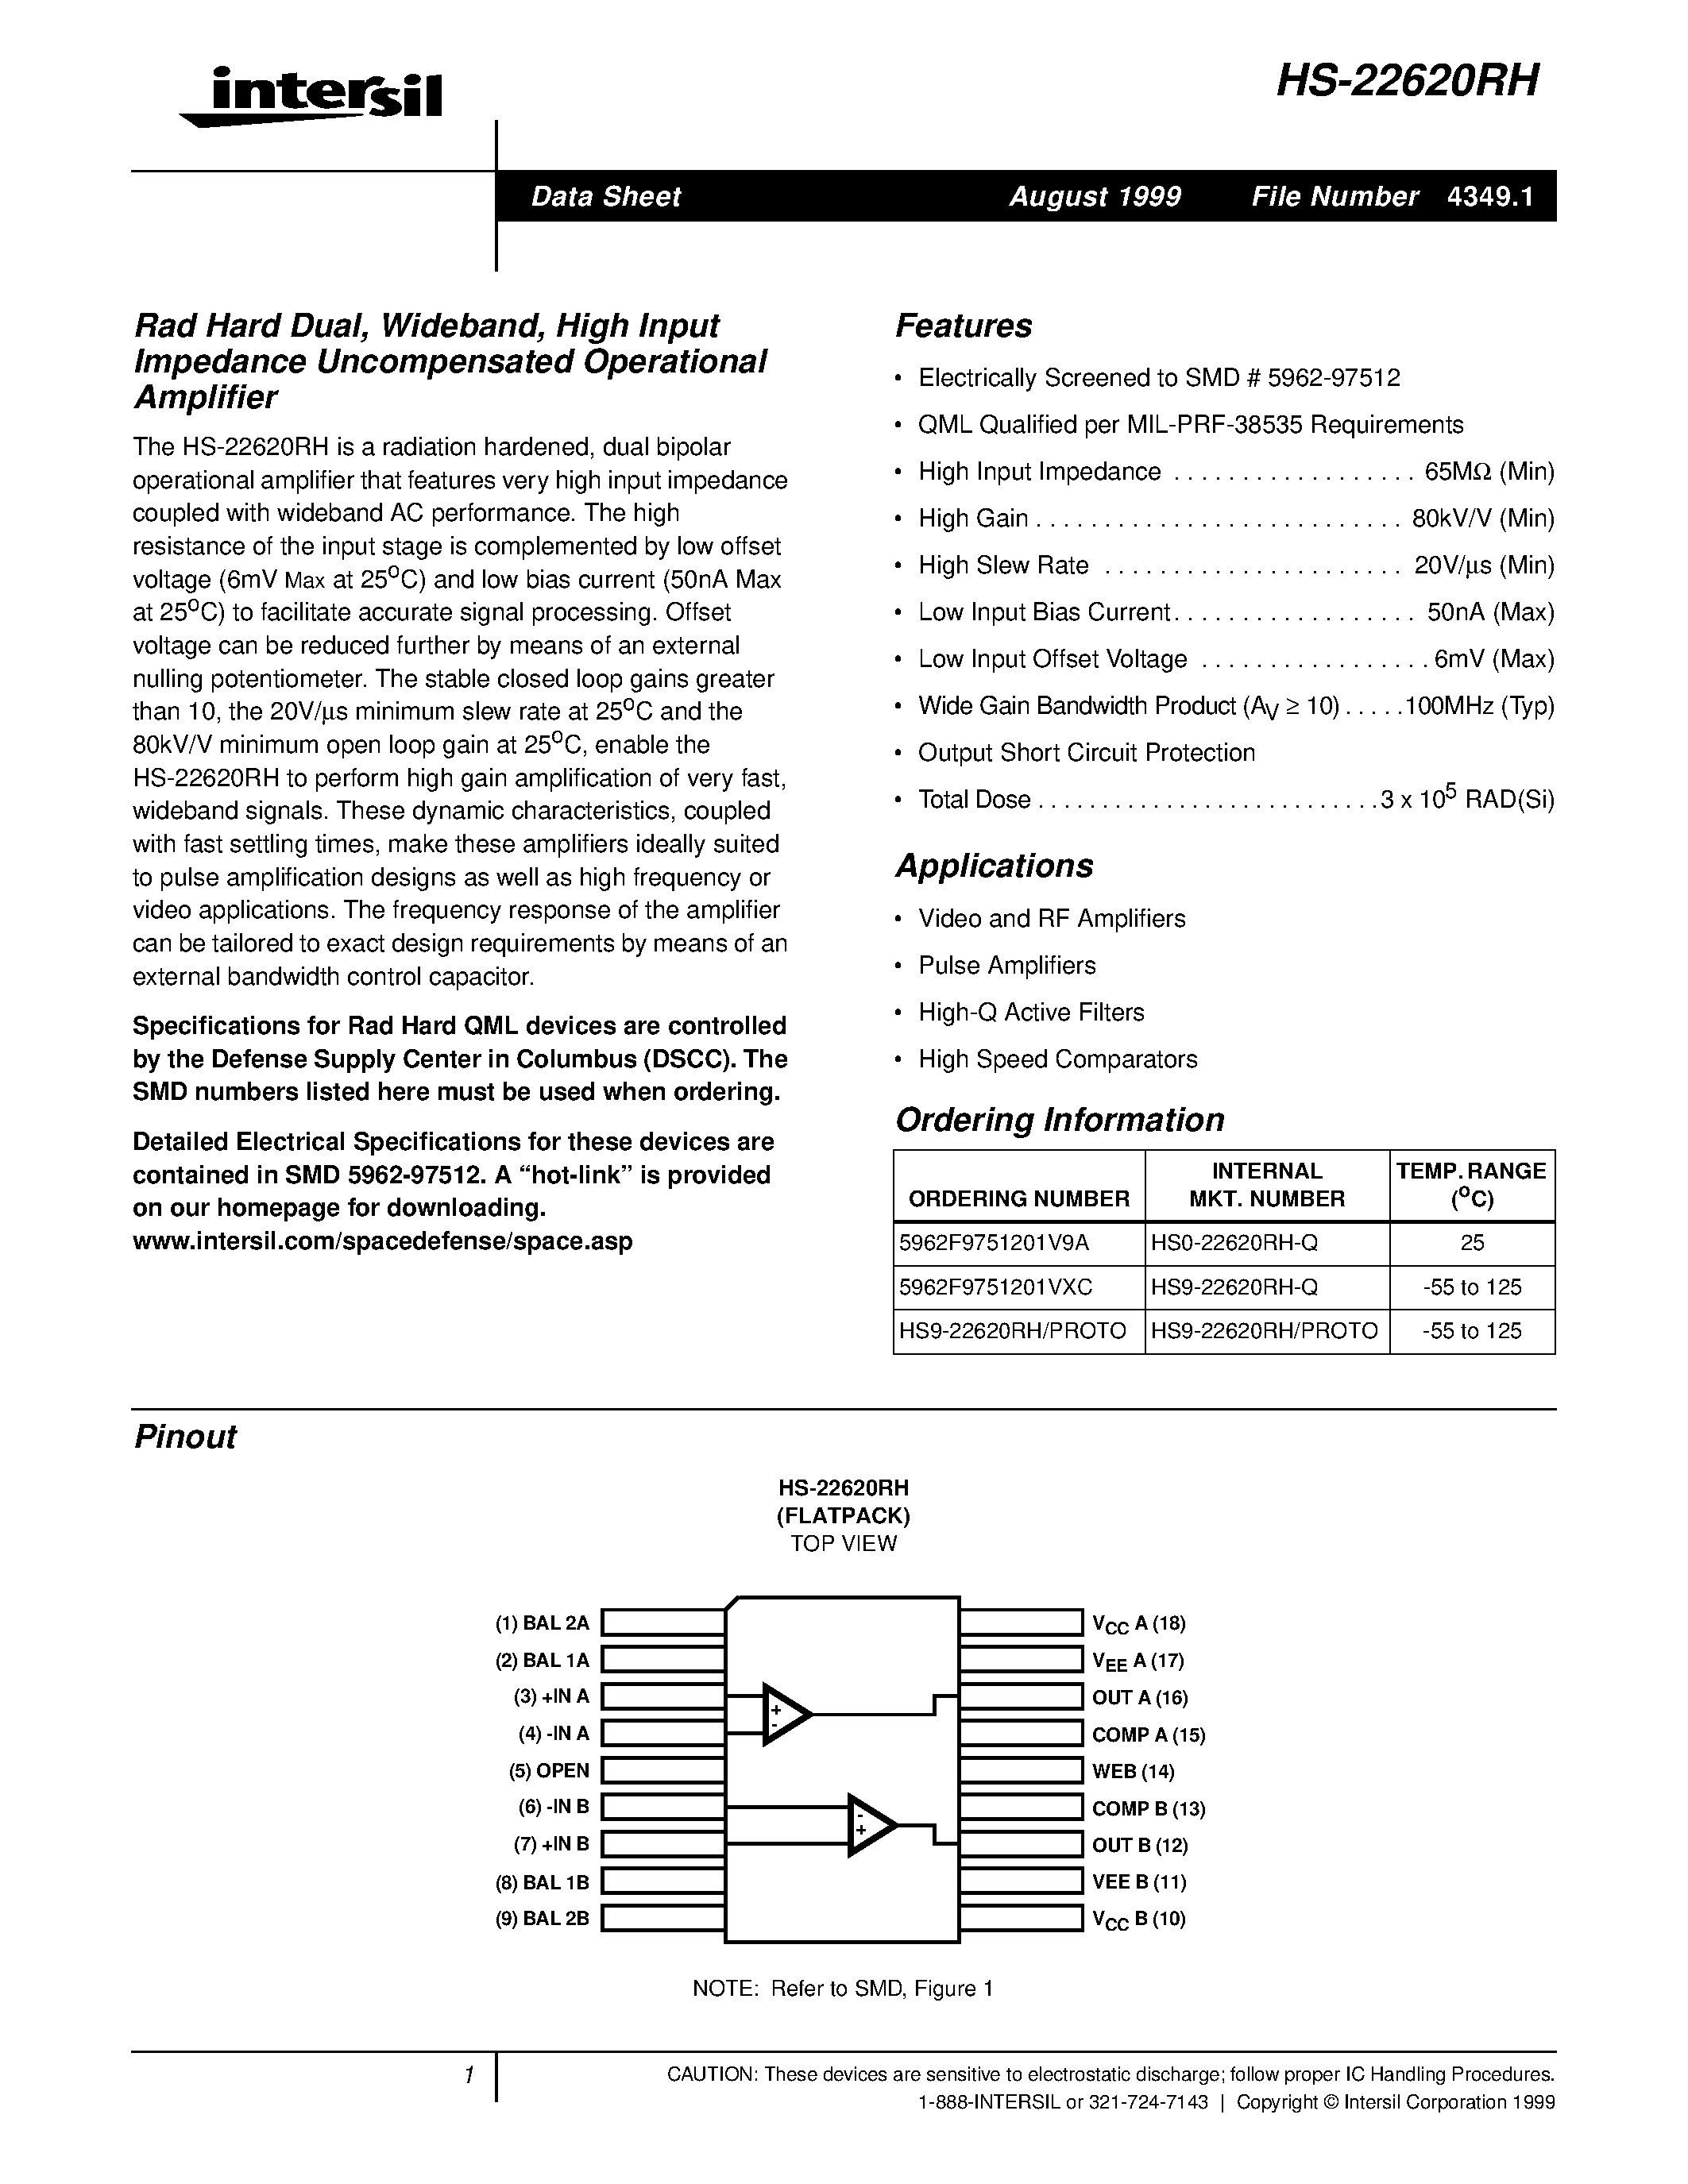 Даташит HS9-22620RH-Q - Rad Hard Dual/ Wideband/ High Input Impedance Uncompensated Operational Amplifier страница 1